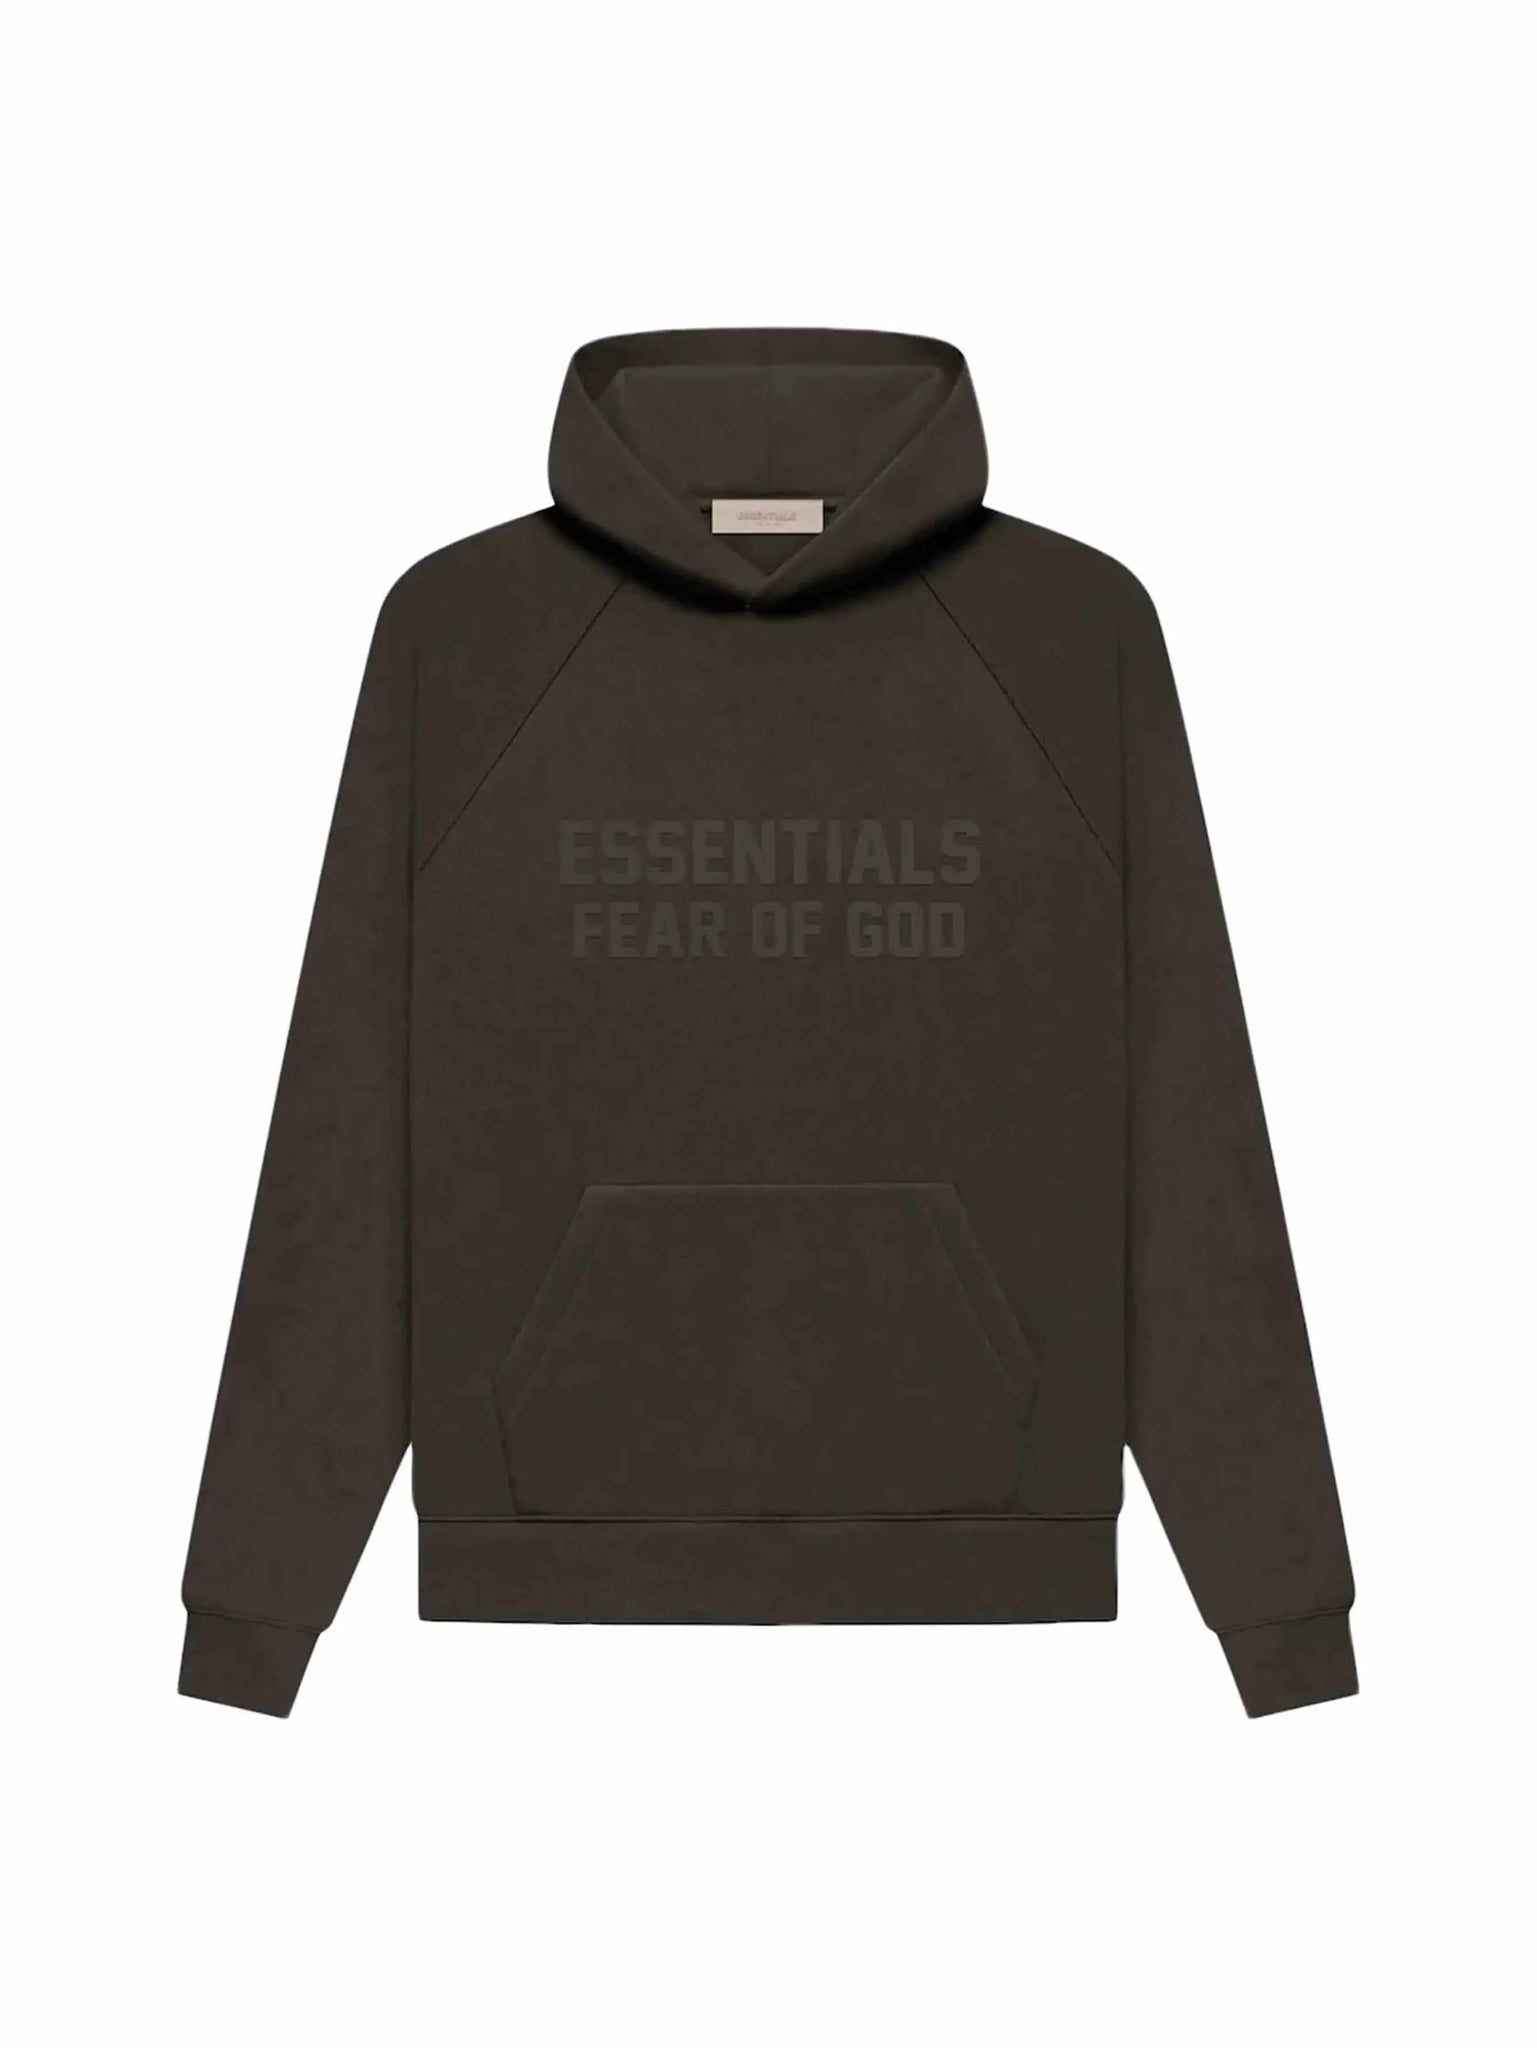 Fear of God Essentials Hoodie Off Black Prior